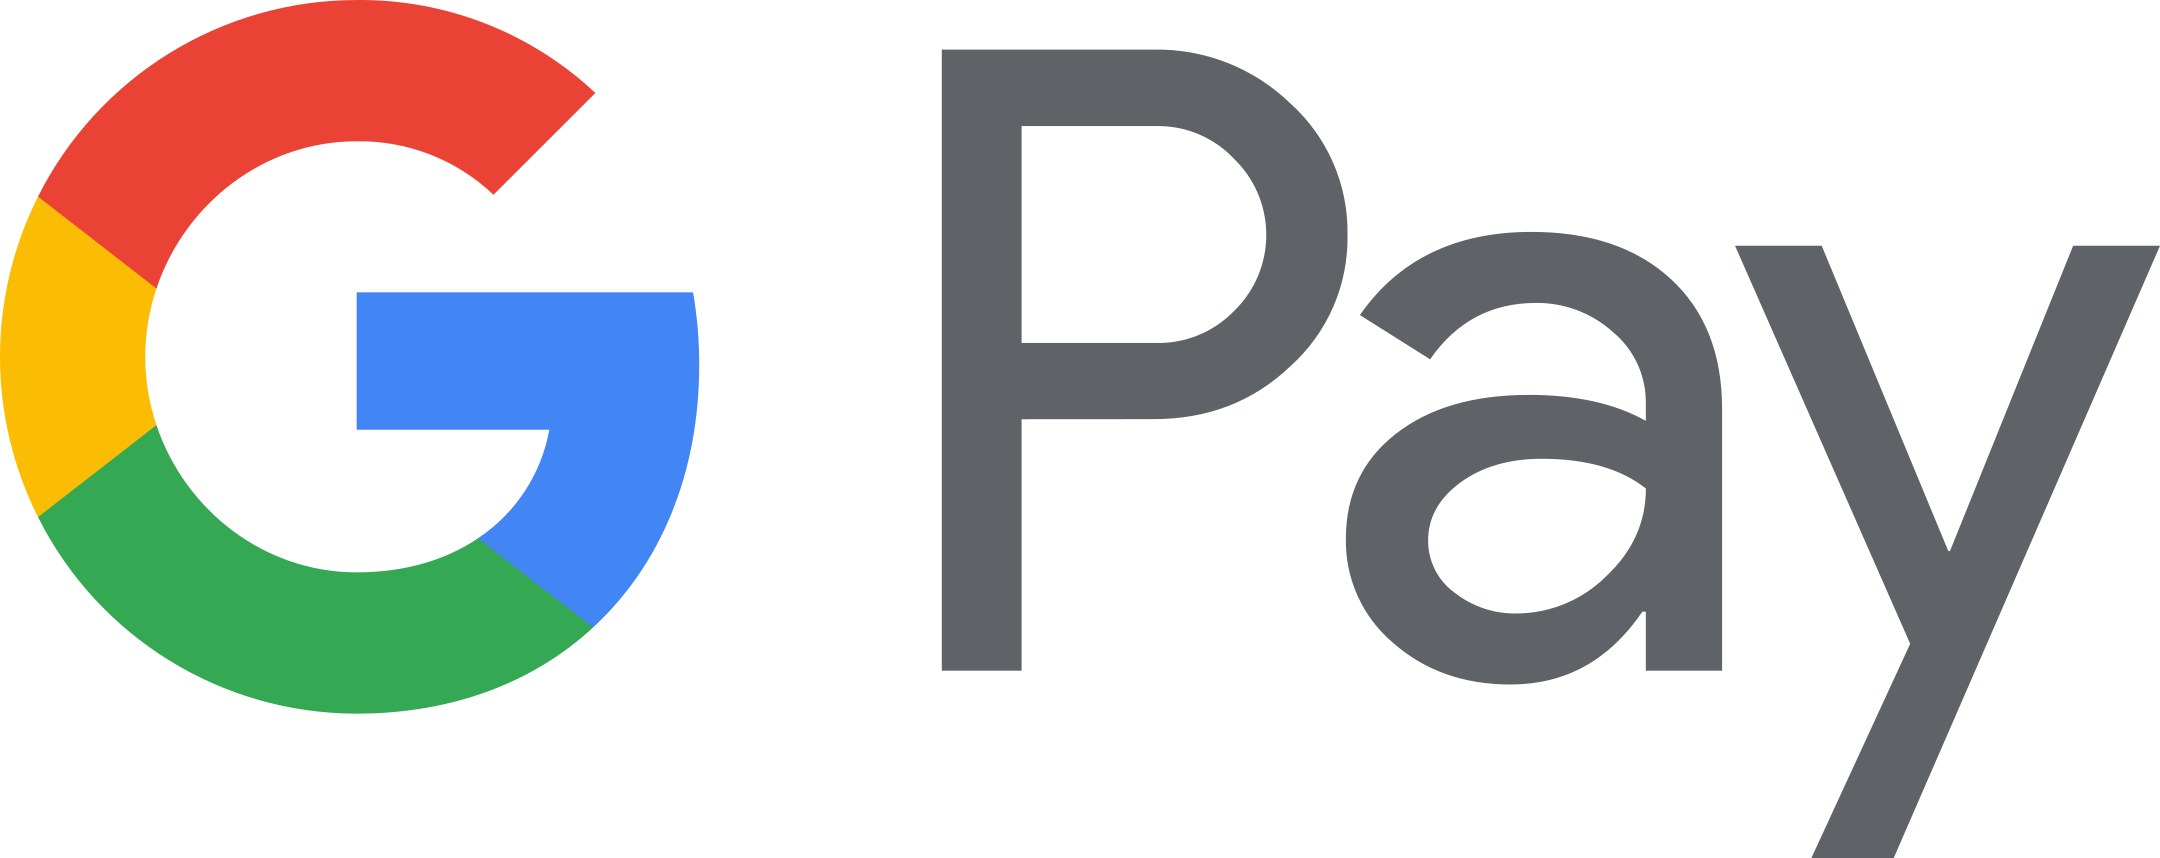 google pay logo 1 - Google Pay Logo